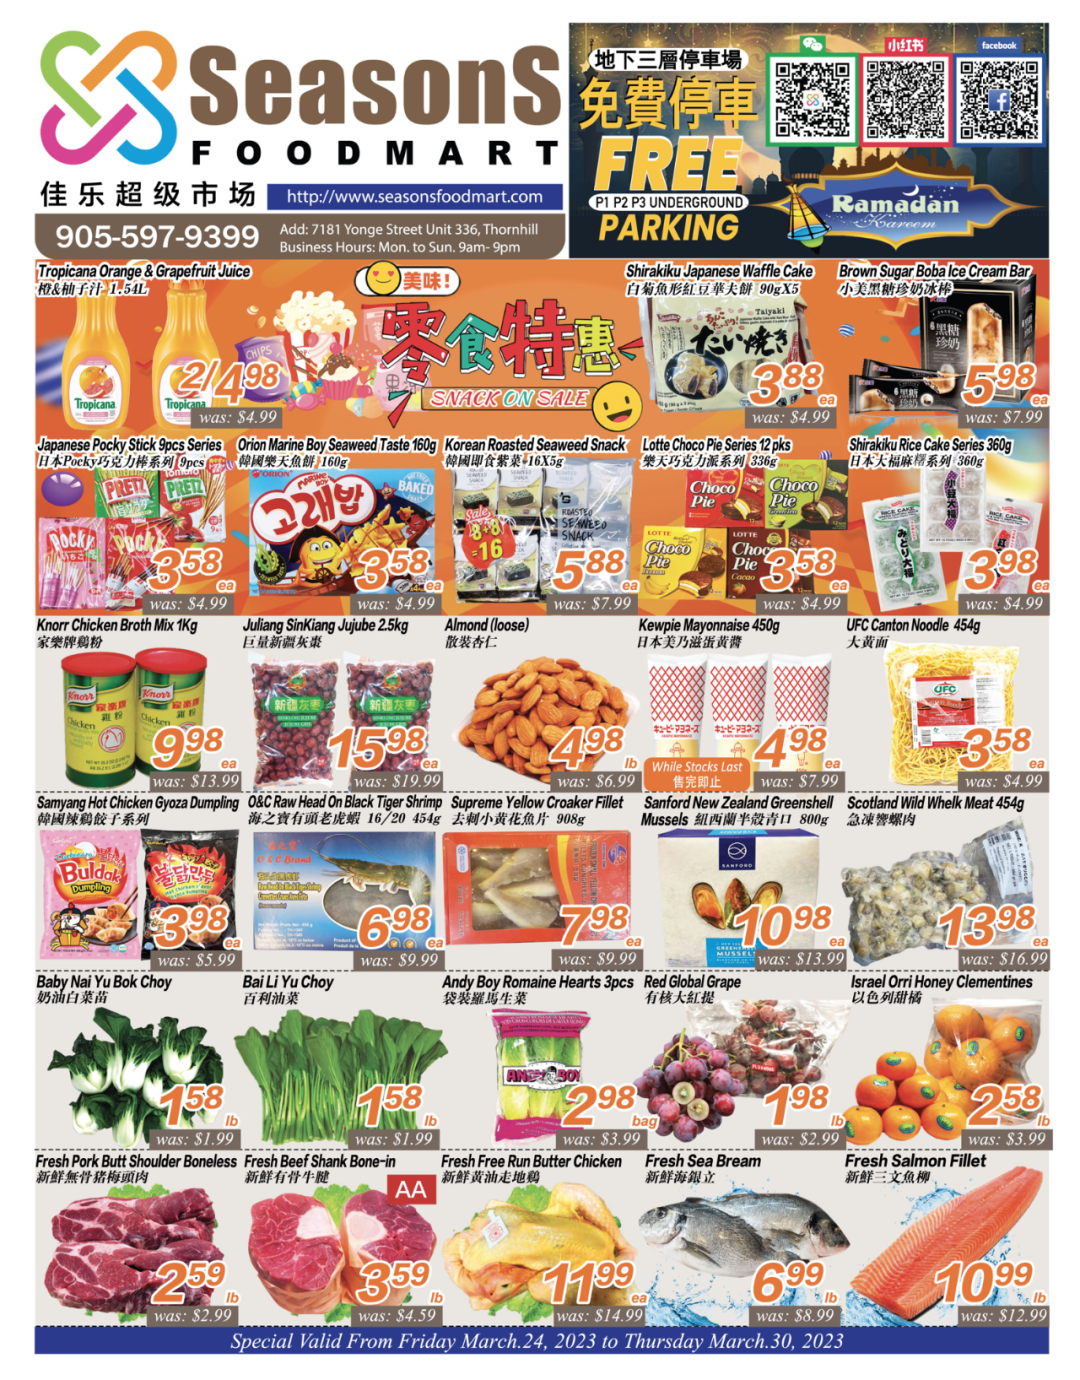 佳乐超市 Seasons Foodmart Flyer 2023年1月27日--2月2日特价商品